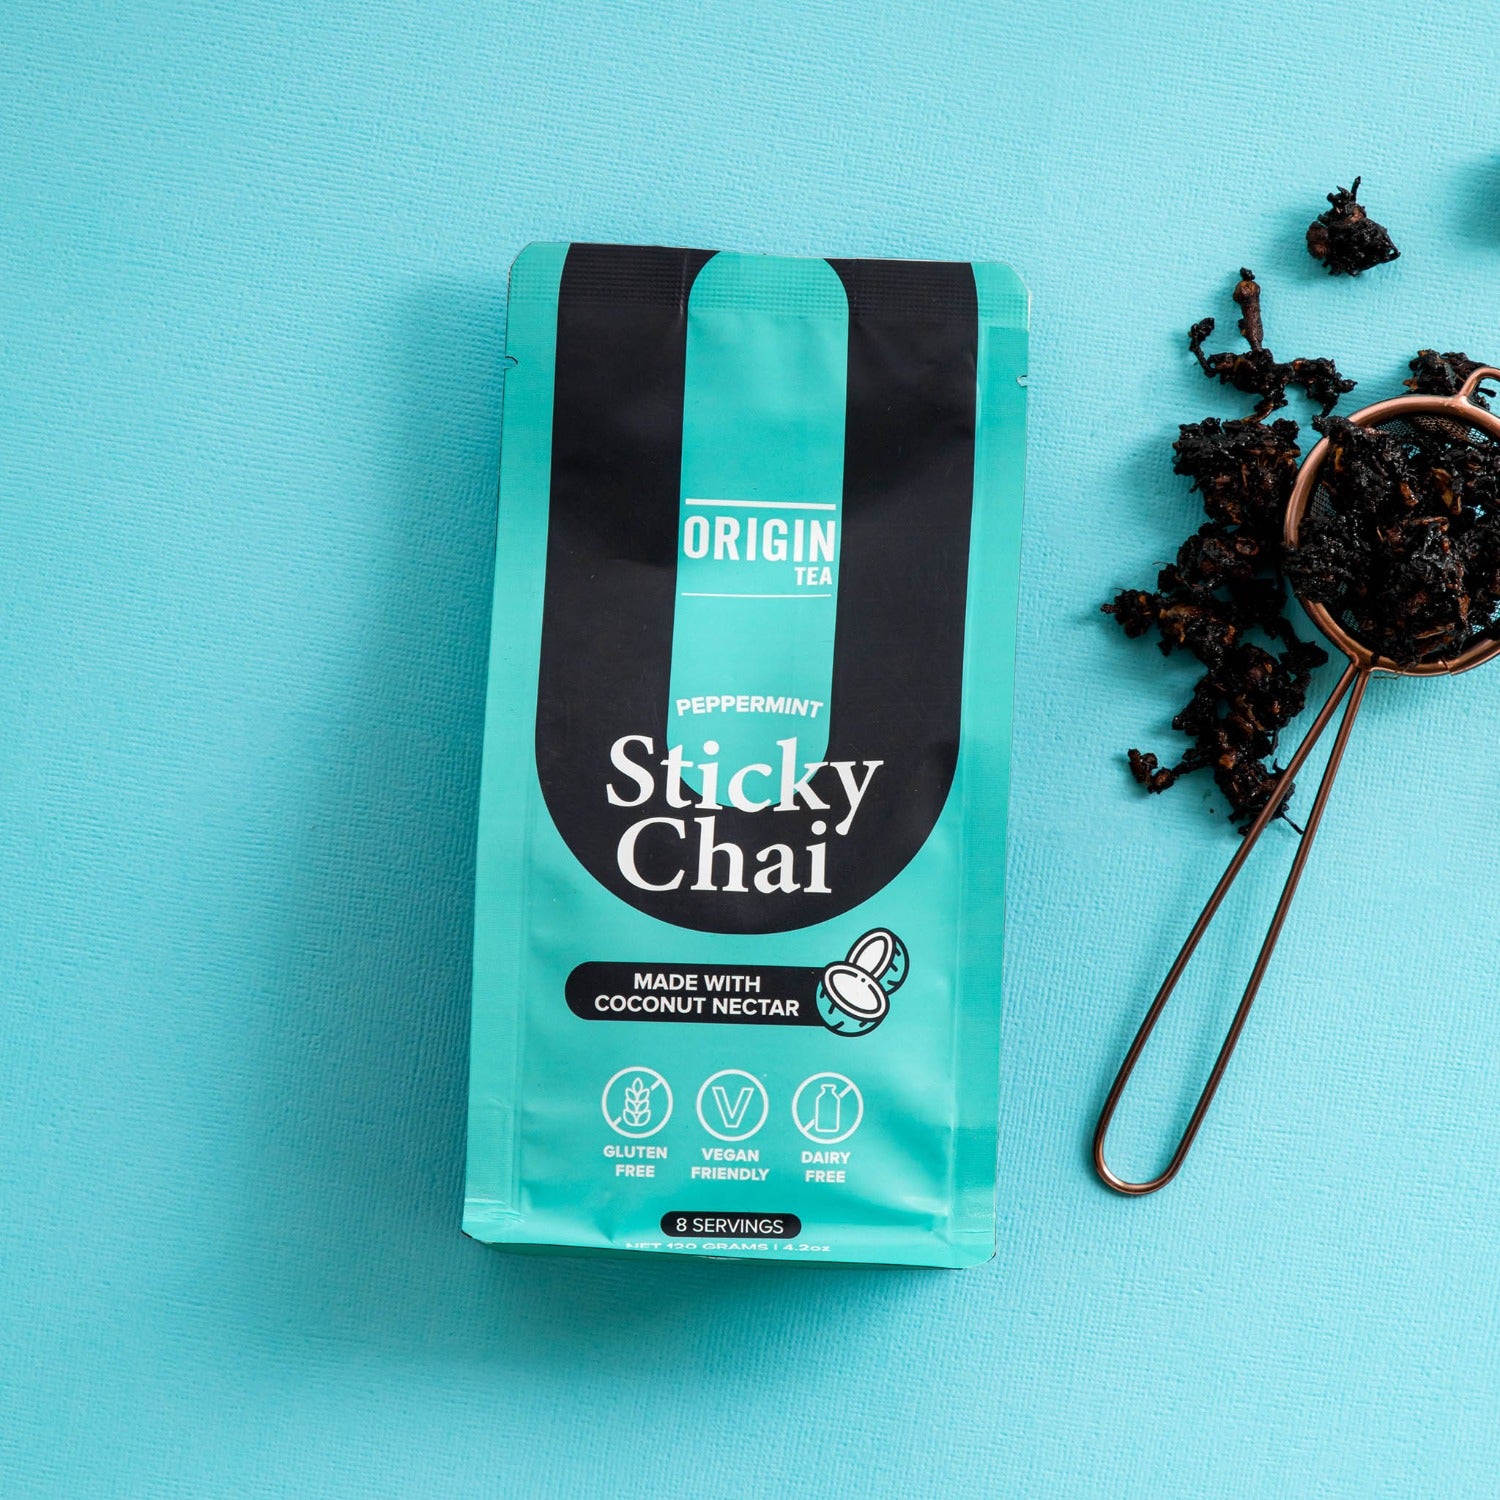 Peppermint Sticky Chai - Origin Tea